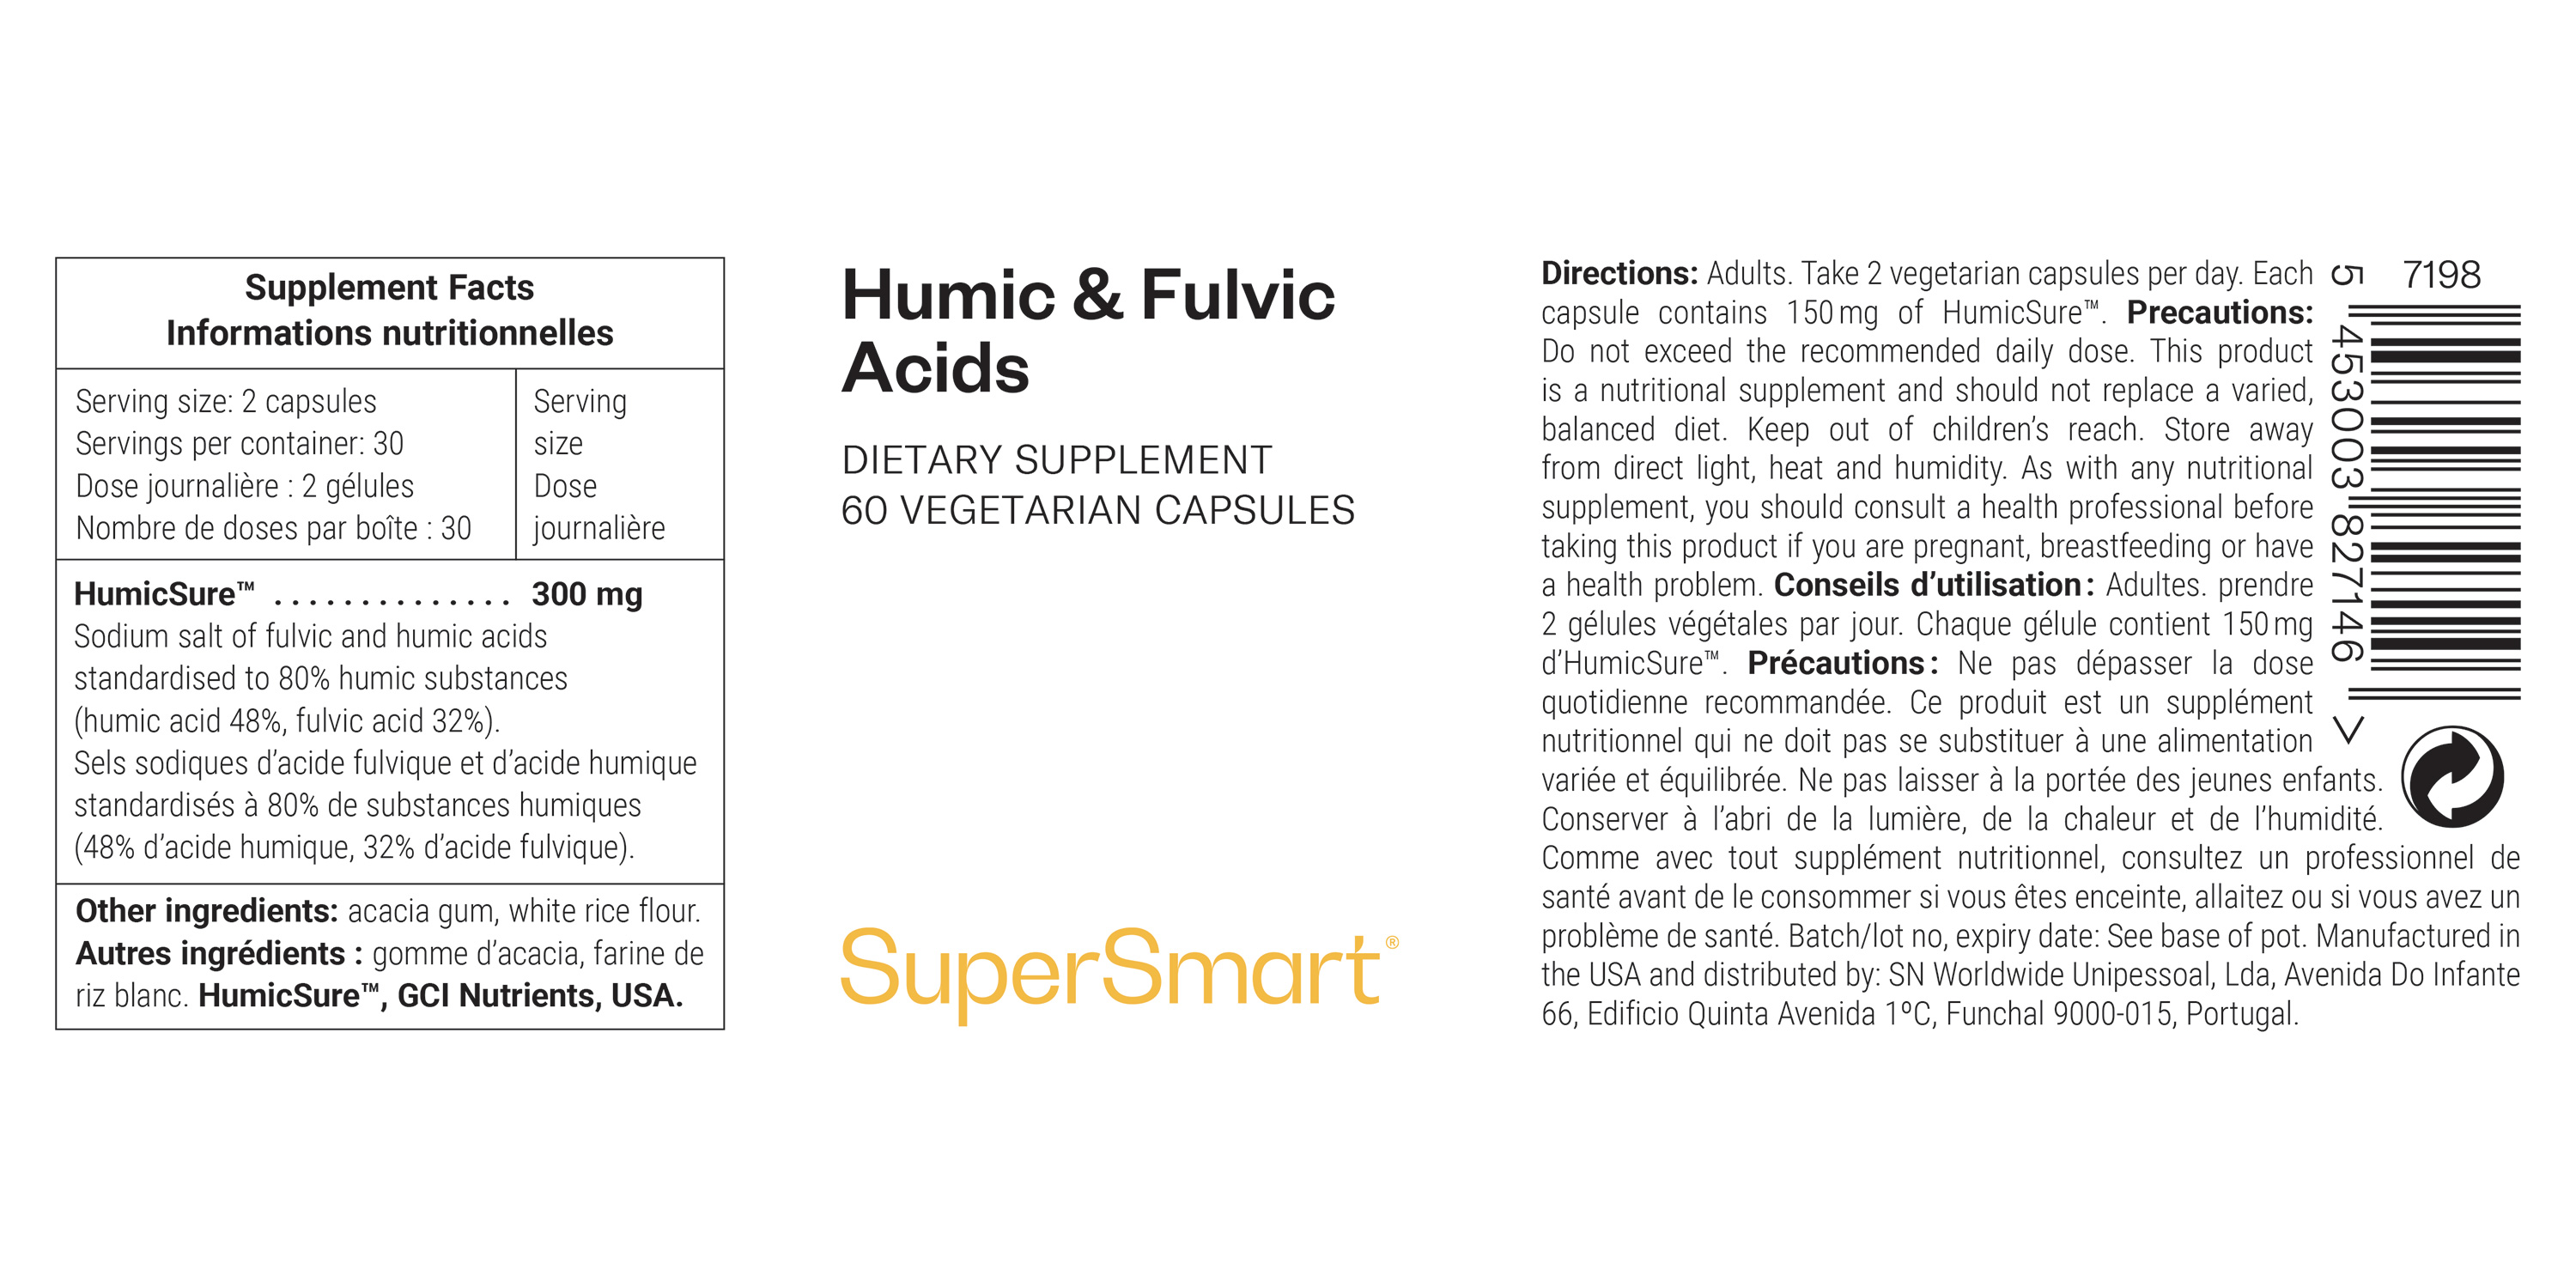 Humic & Fulvic Acids Supplement